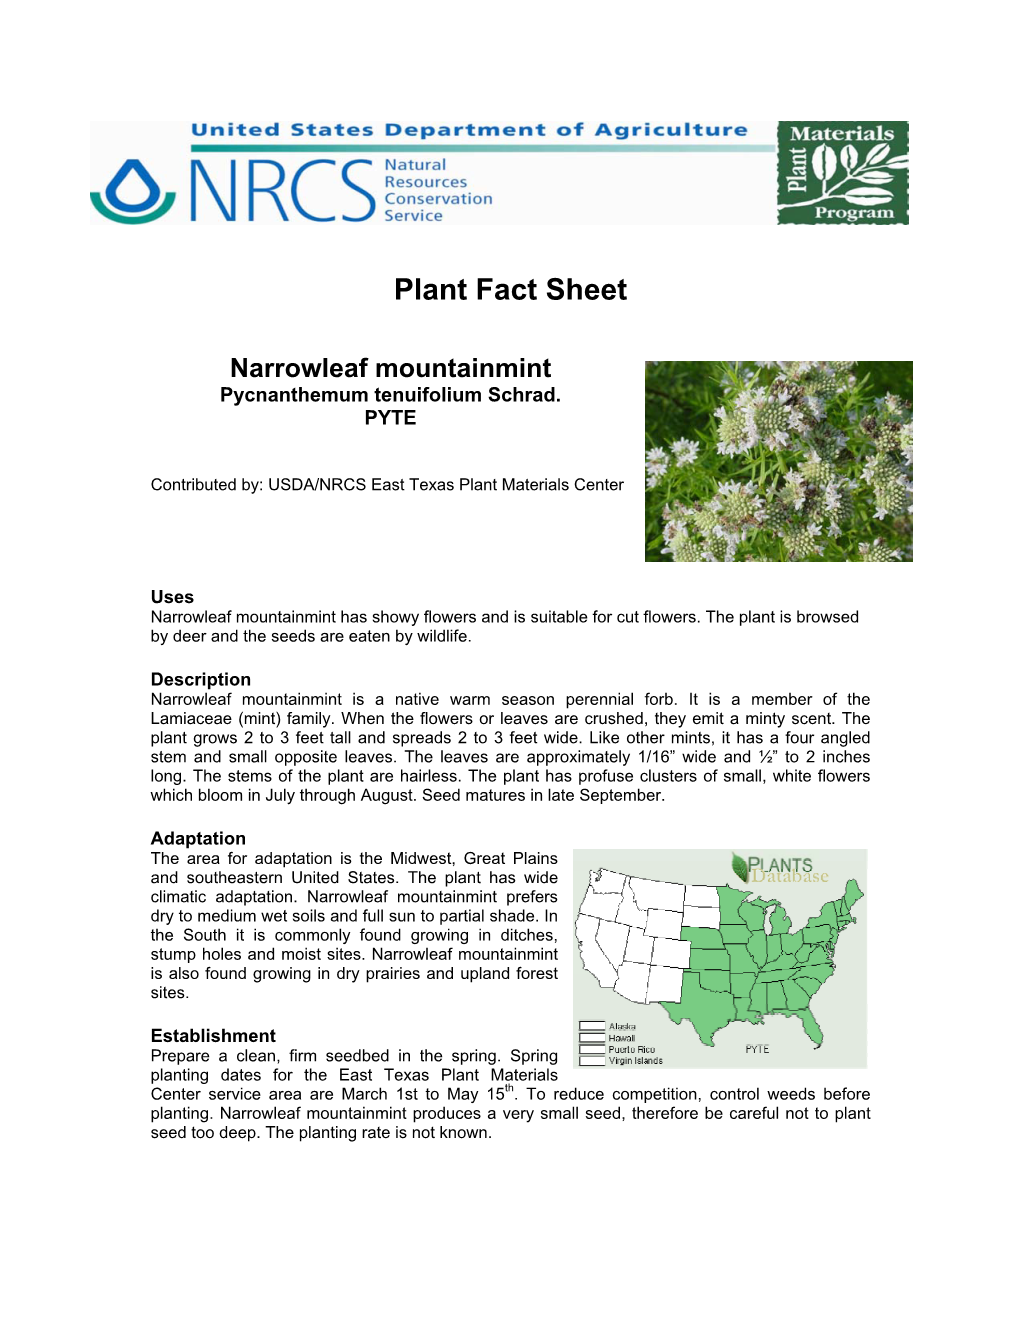 Narrowleaf Mountainmint Plant Fact Sheet